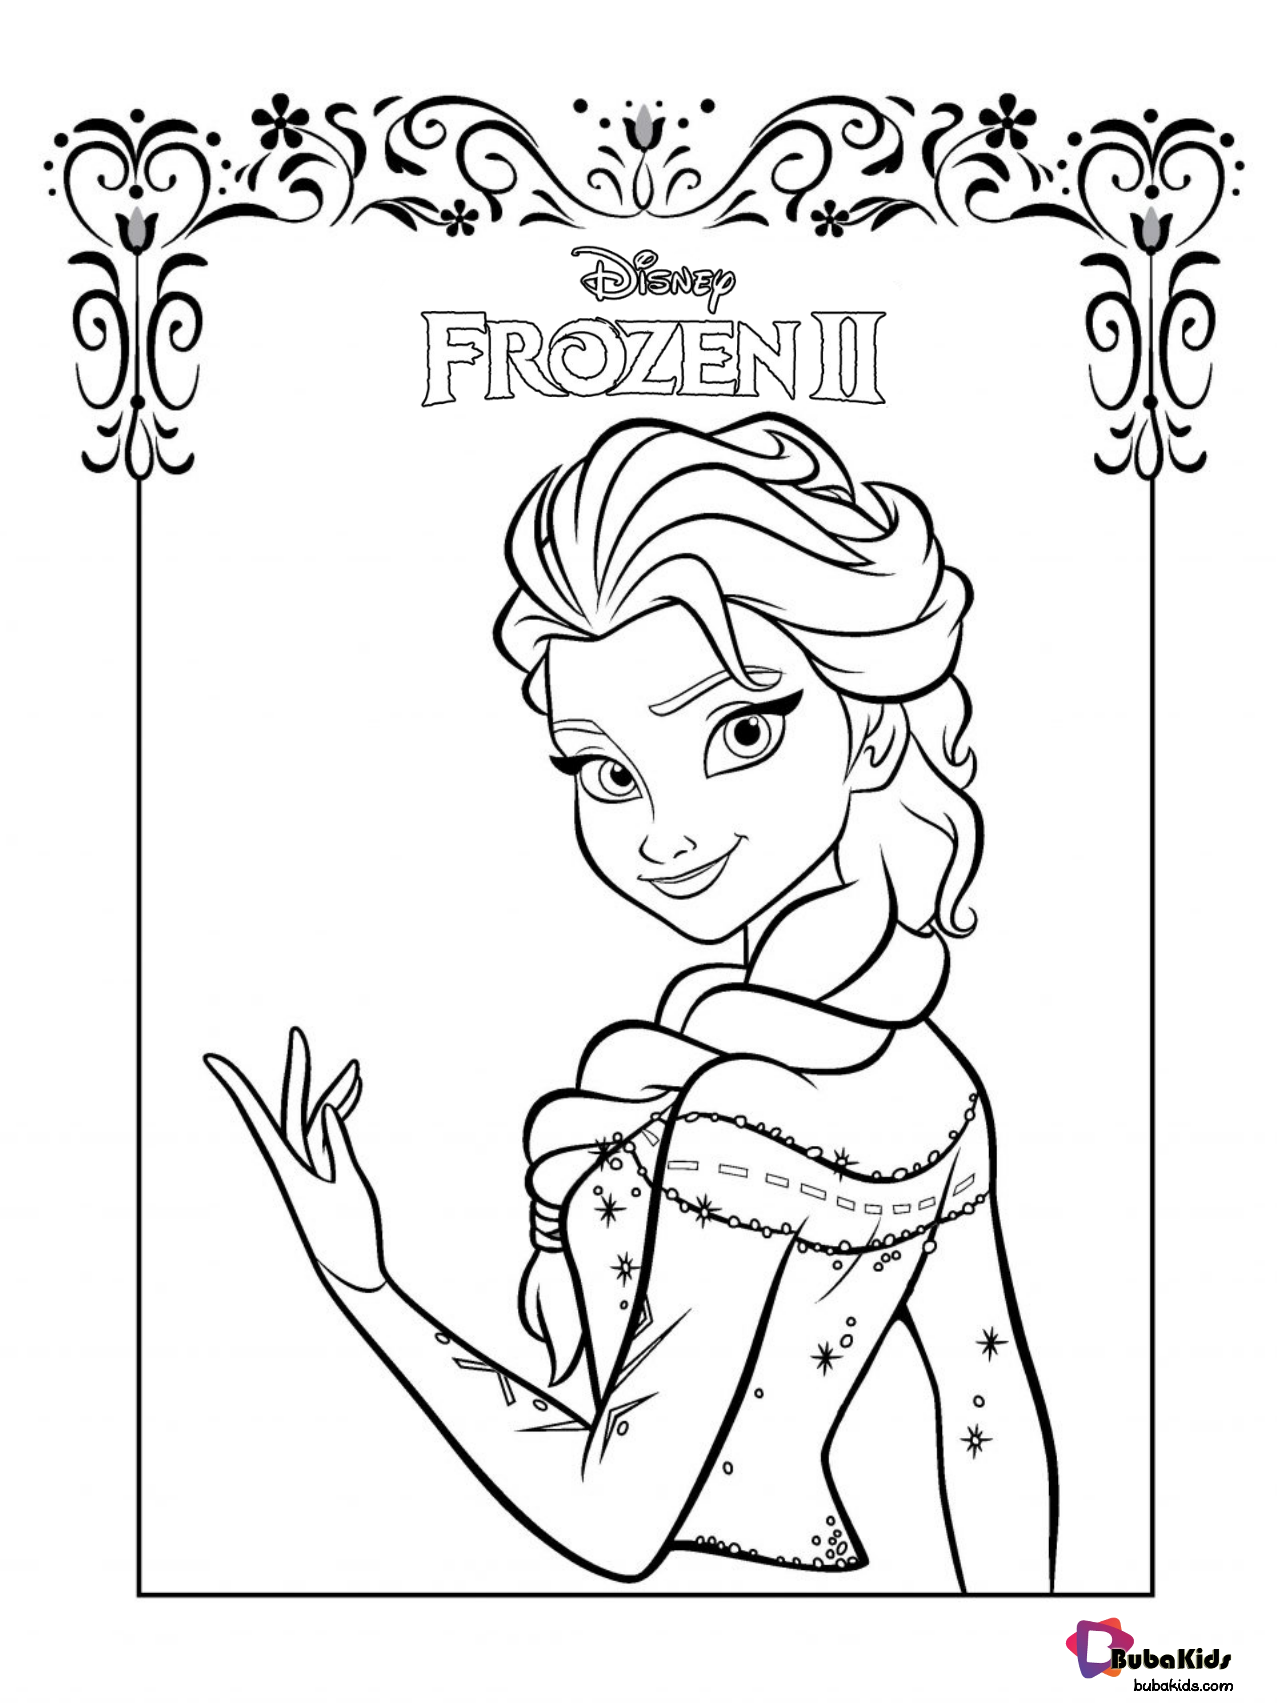 Frozen 2 Beautiful Queen Elsa coloring page. - BubaKids.com